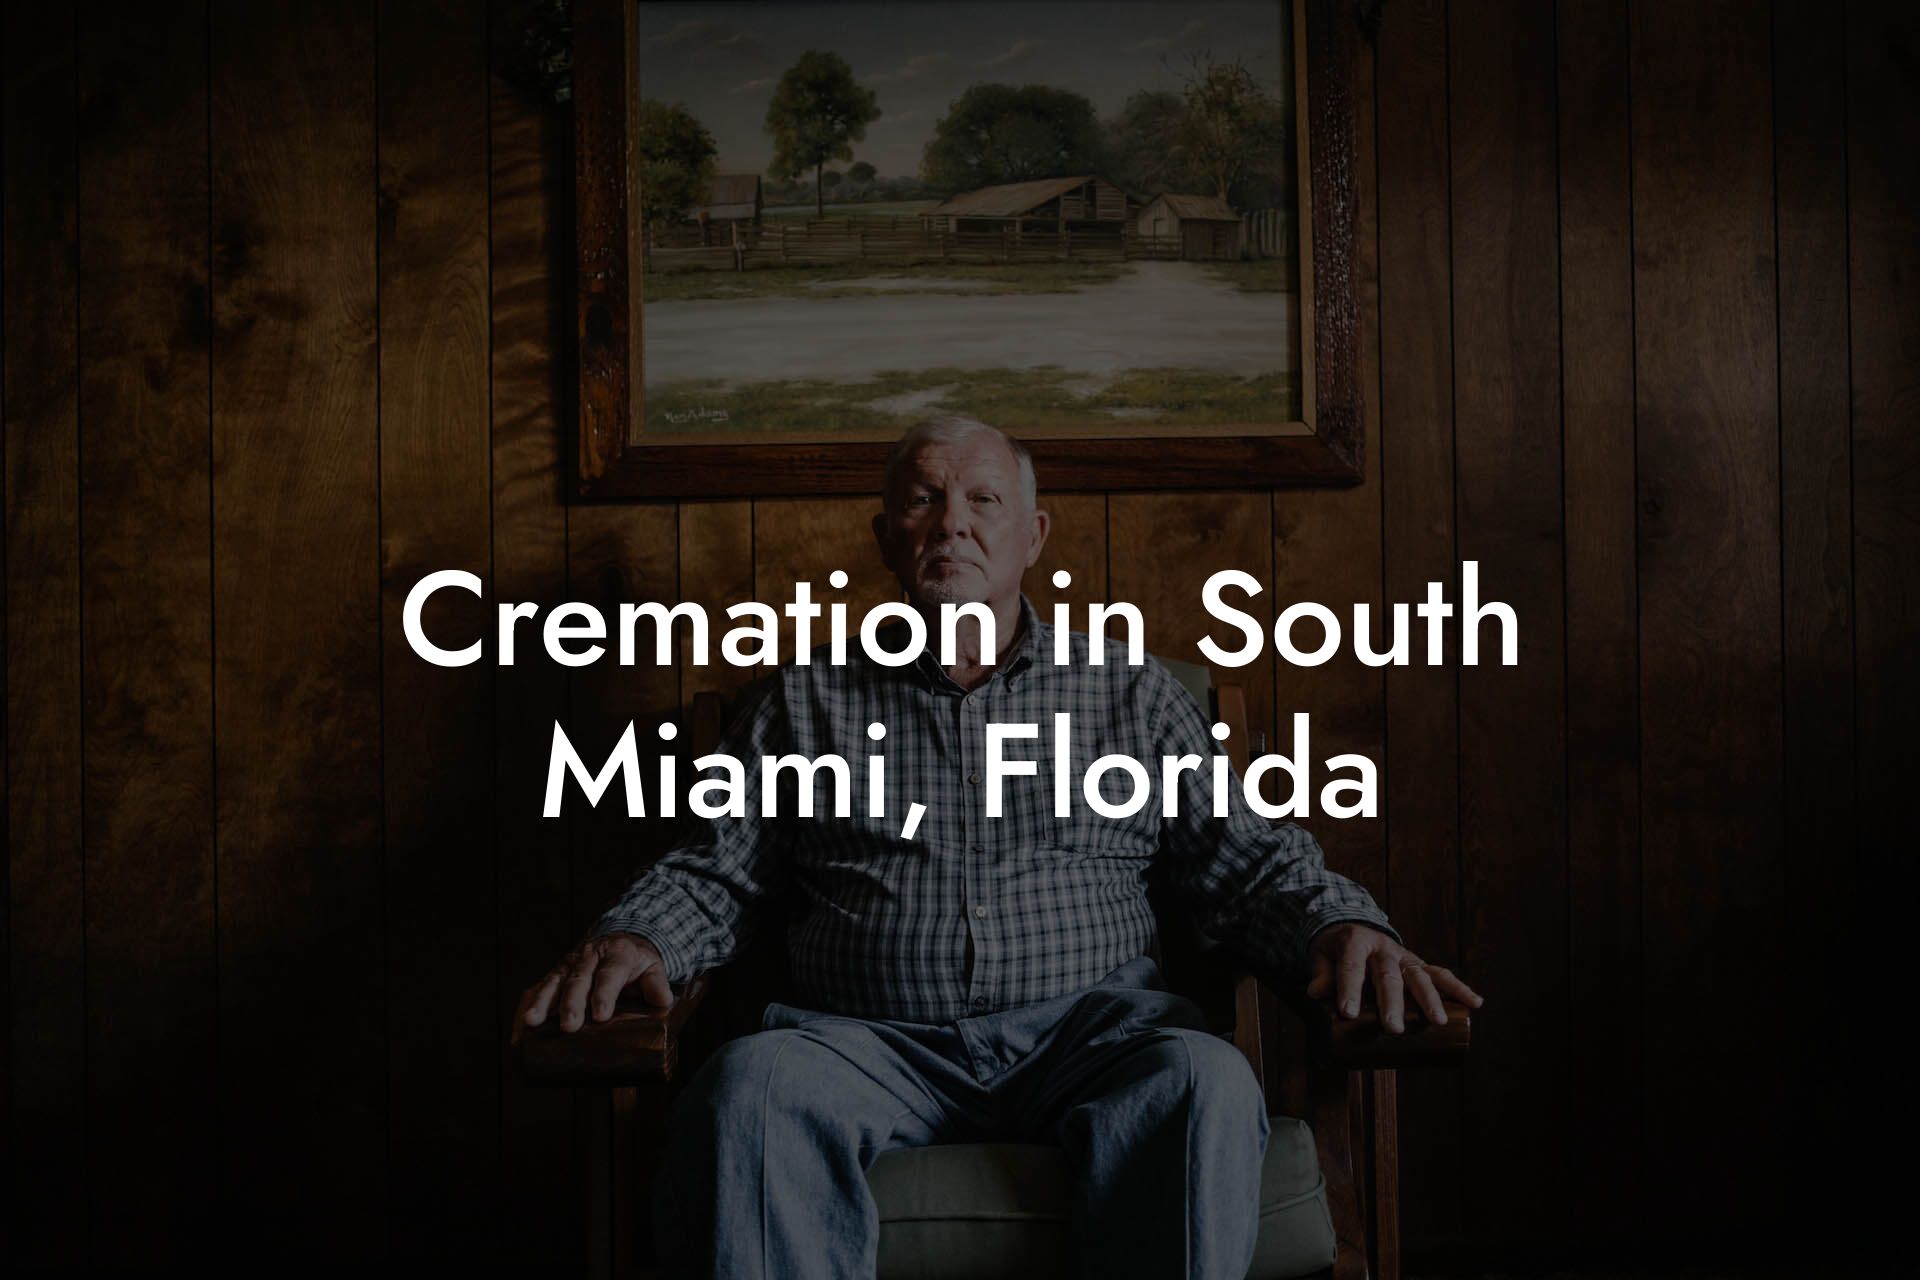 Cremation in South Miami, Florida